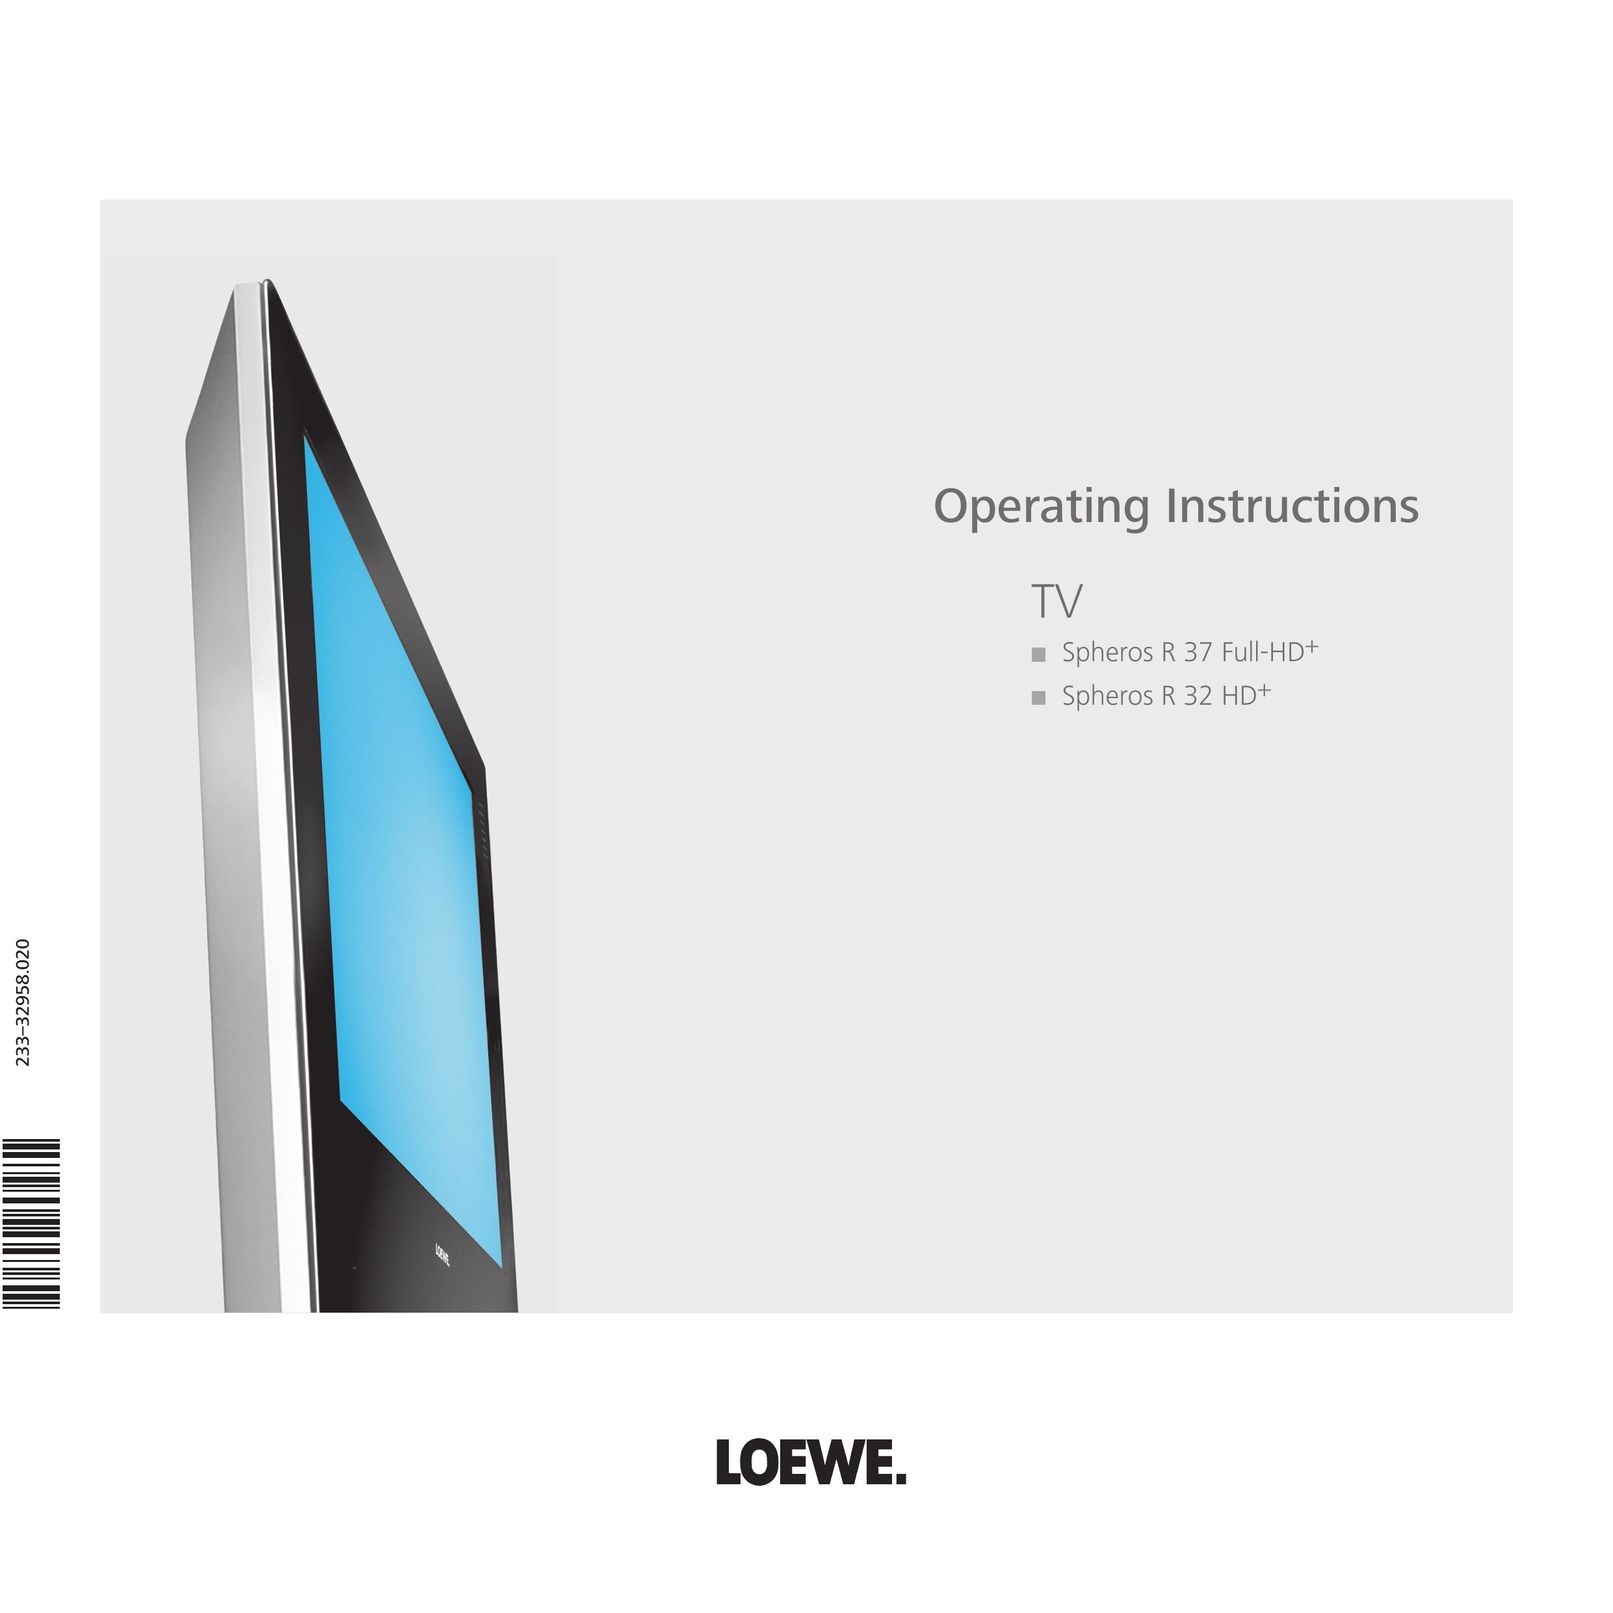 Loewe Spheros R 37Full-HD+ CRT Television User Manual